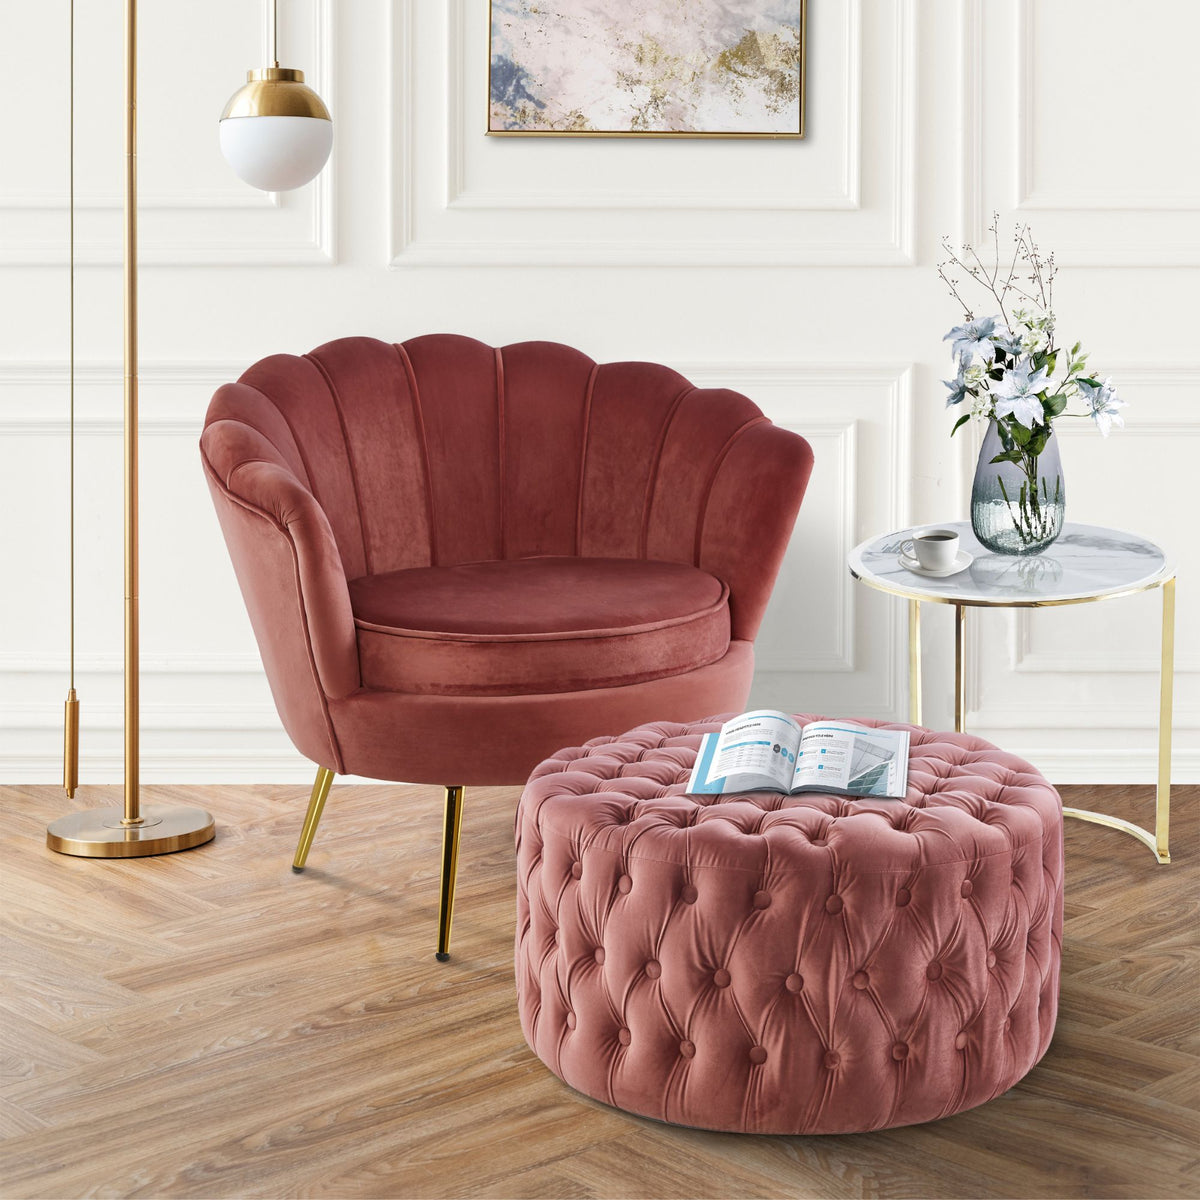 Uzona Tufted Velvet Fabric Round Ottoman Footstools - Rose Pink - Notbrand